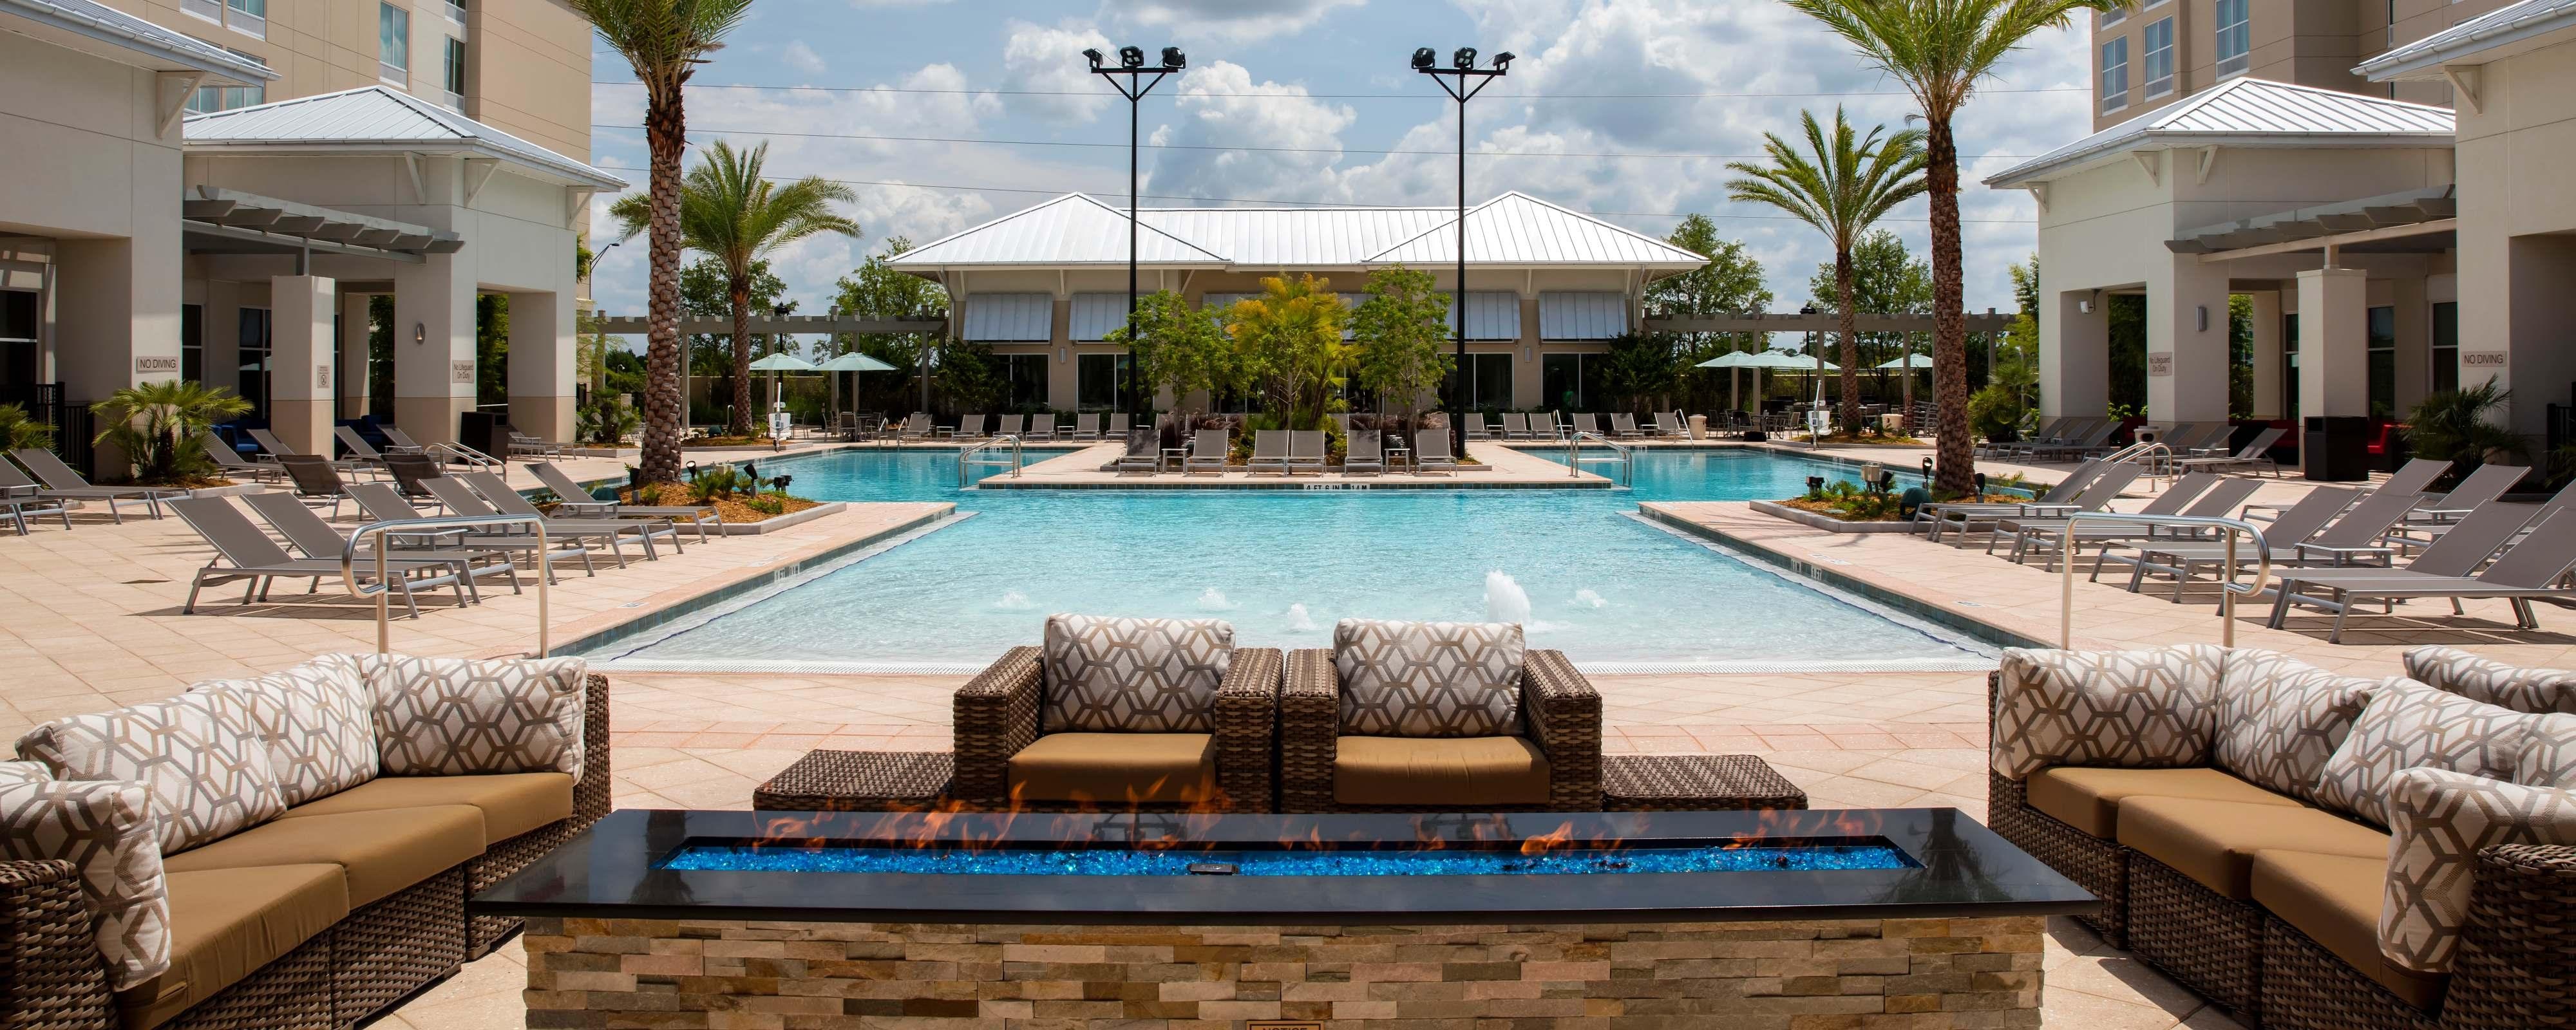 Hotels in Winter Garden, Florida | SpringHill Suites ...